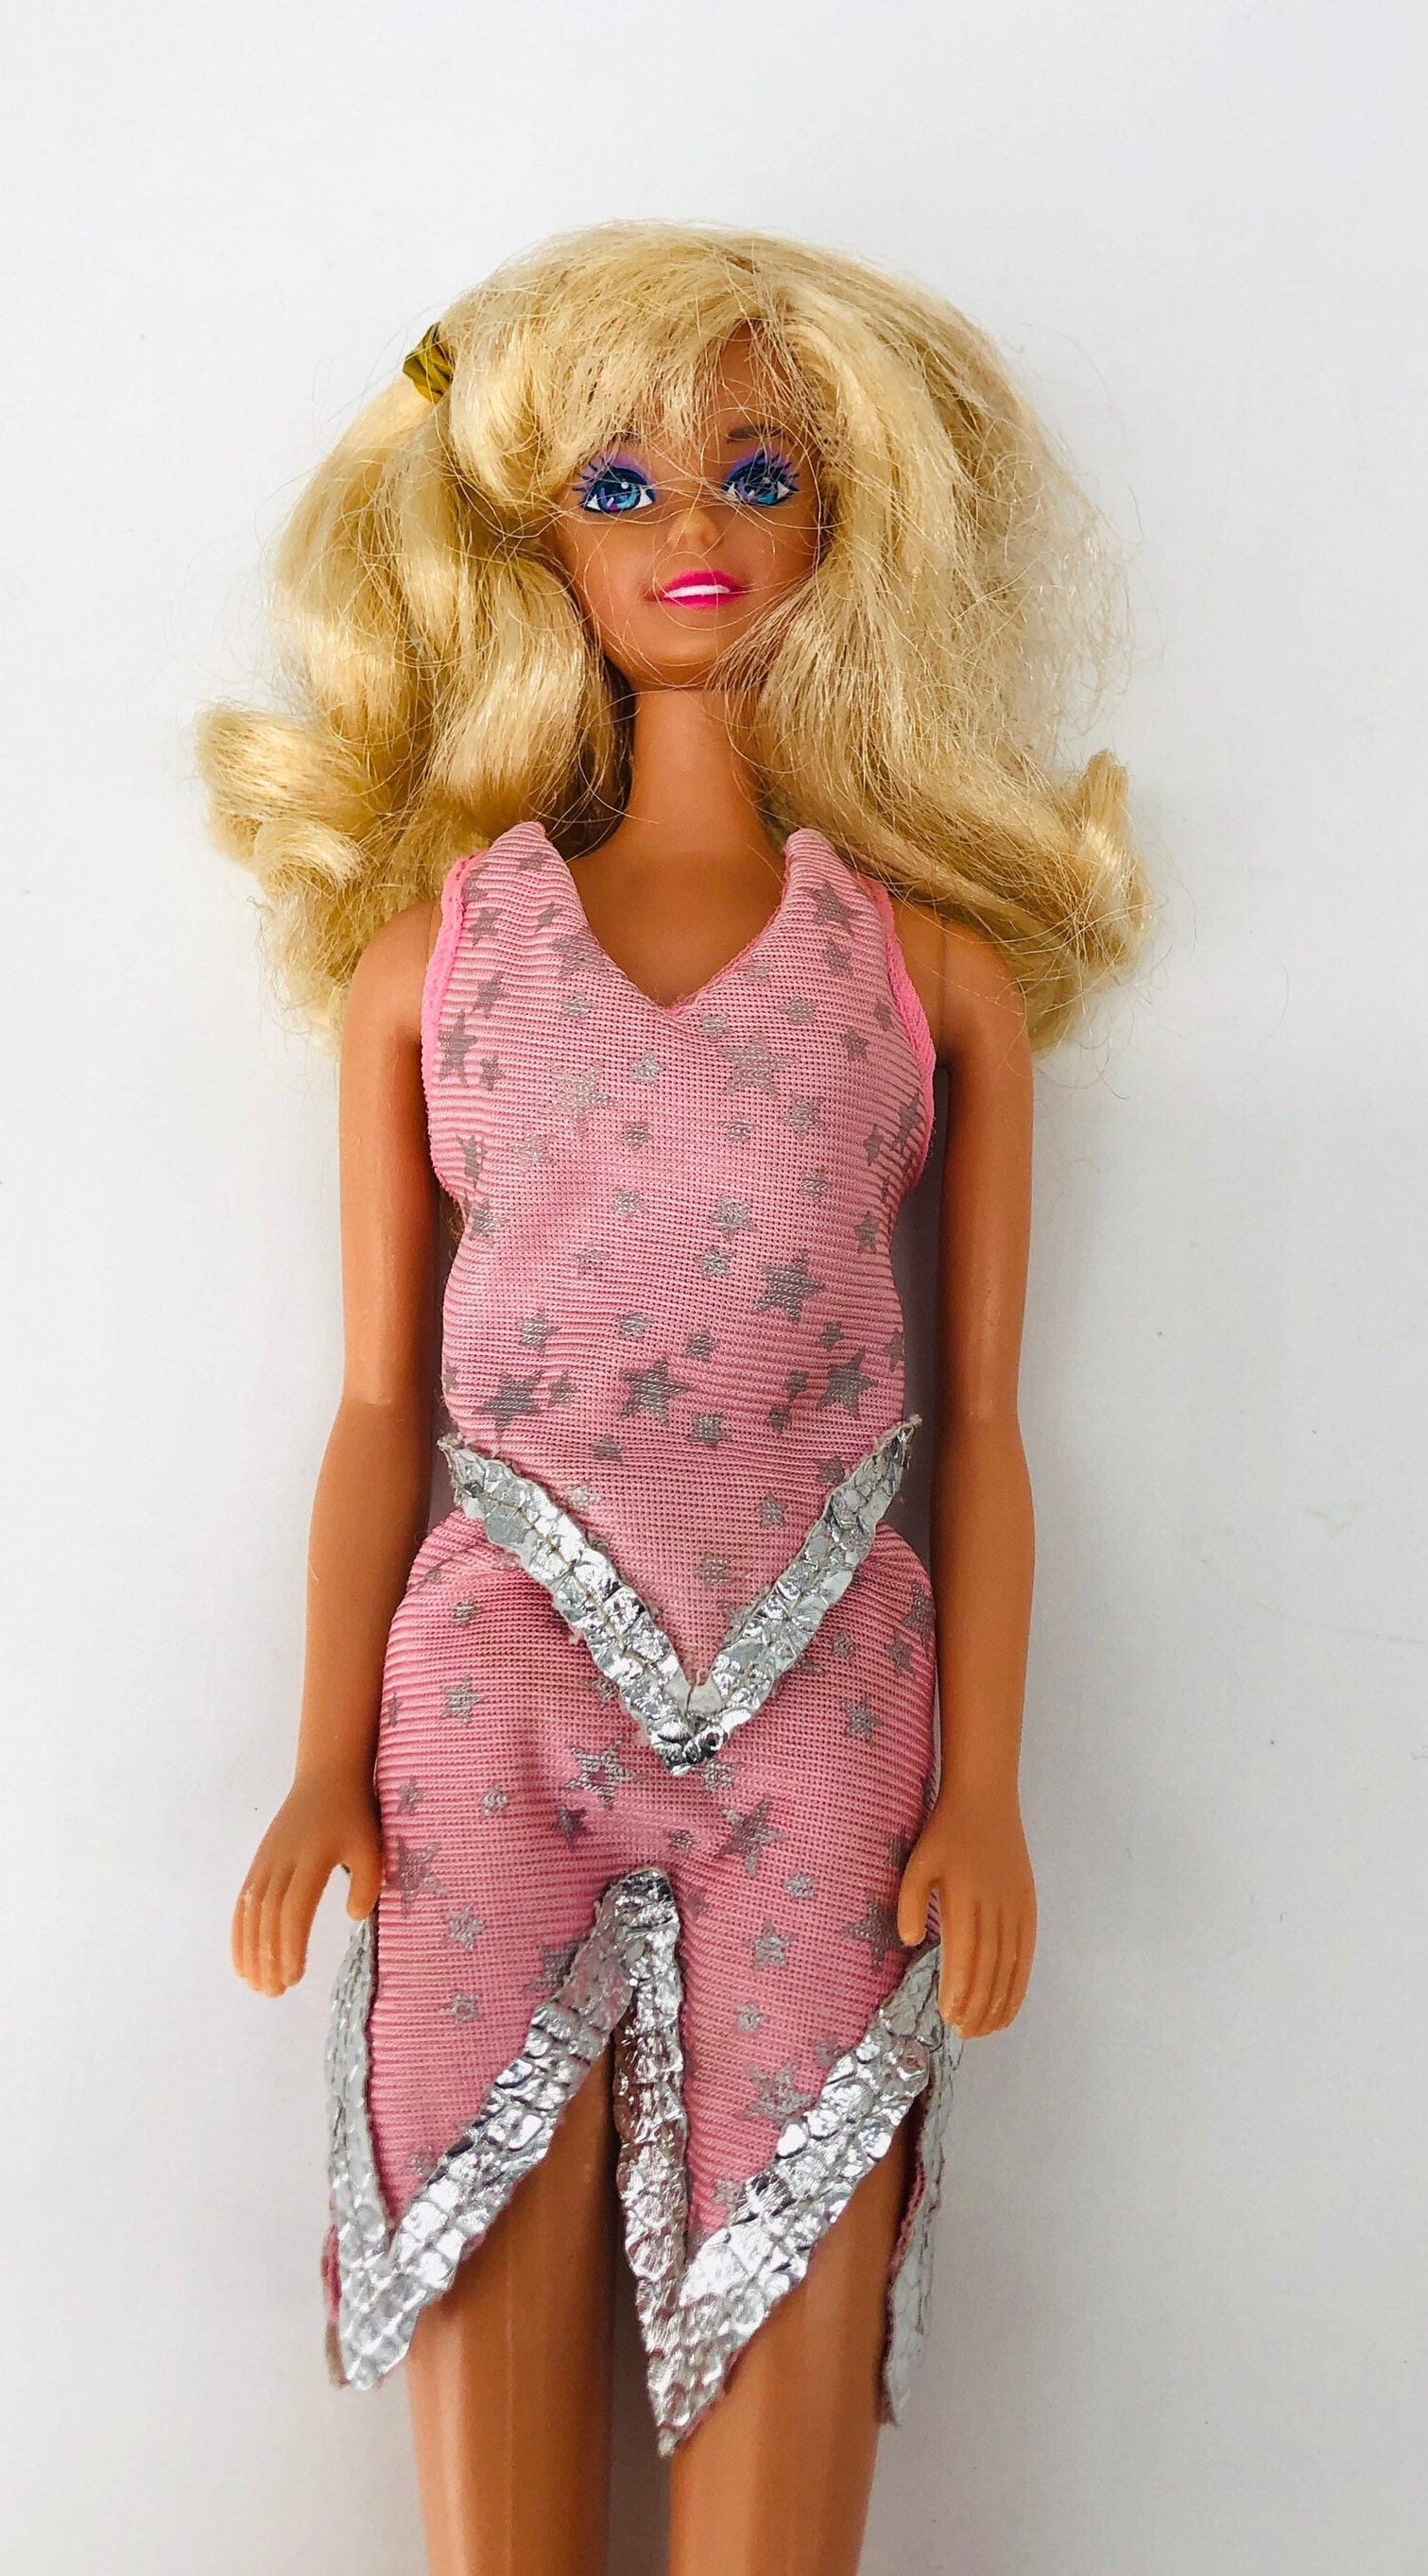 Only 2 Left Barbie Dolls, Vintage Barbies, 1980s Barbies, 1990s Barbies,  Genuine Barbie Outfits, Mattel Doll Clothes, Sold Individually -  Israel